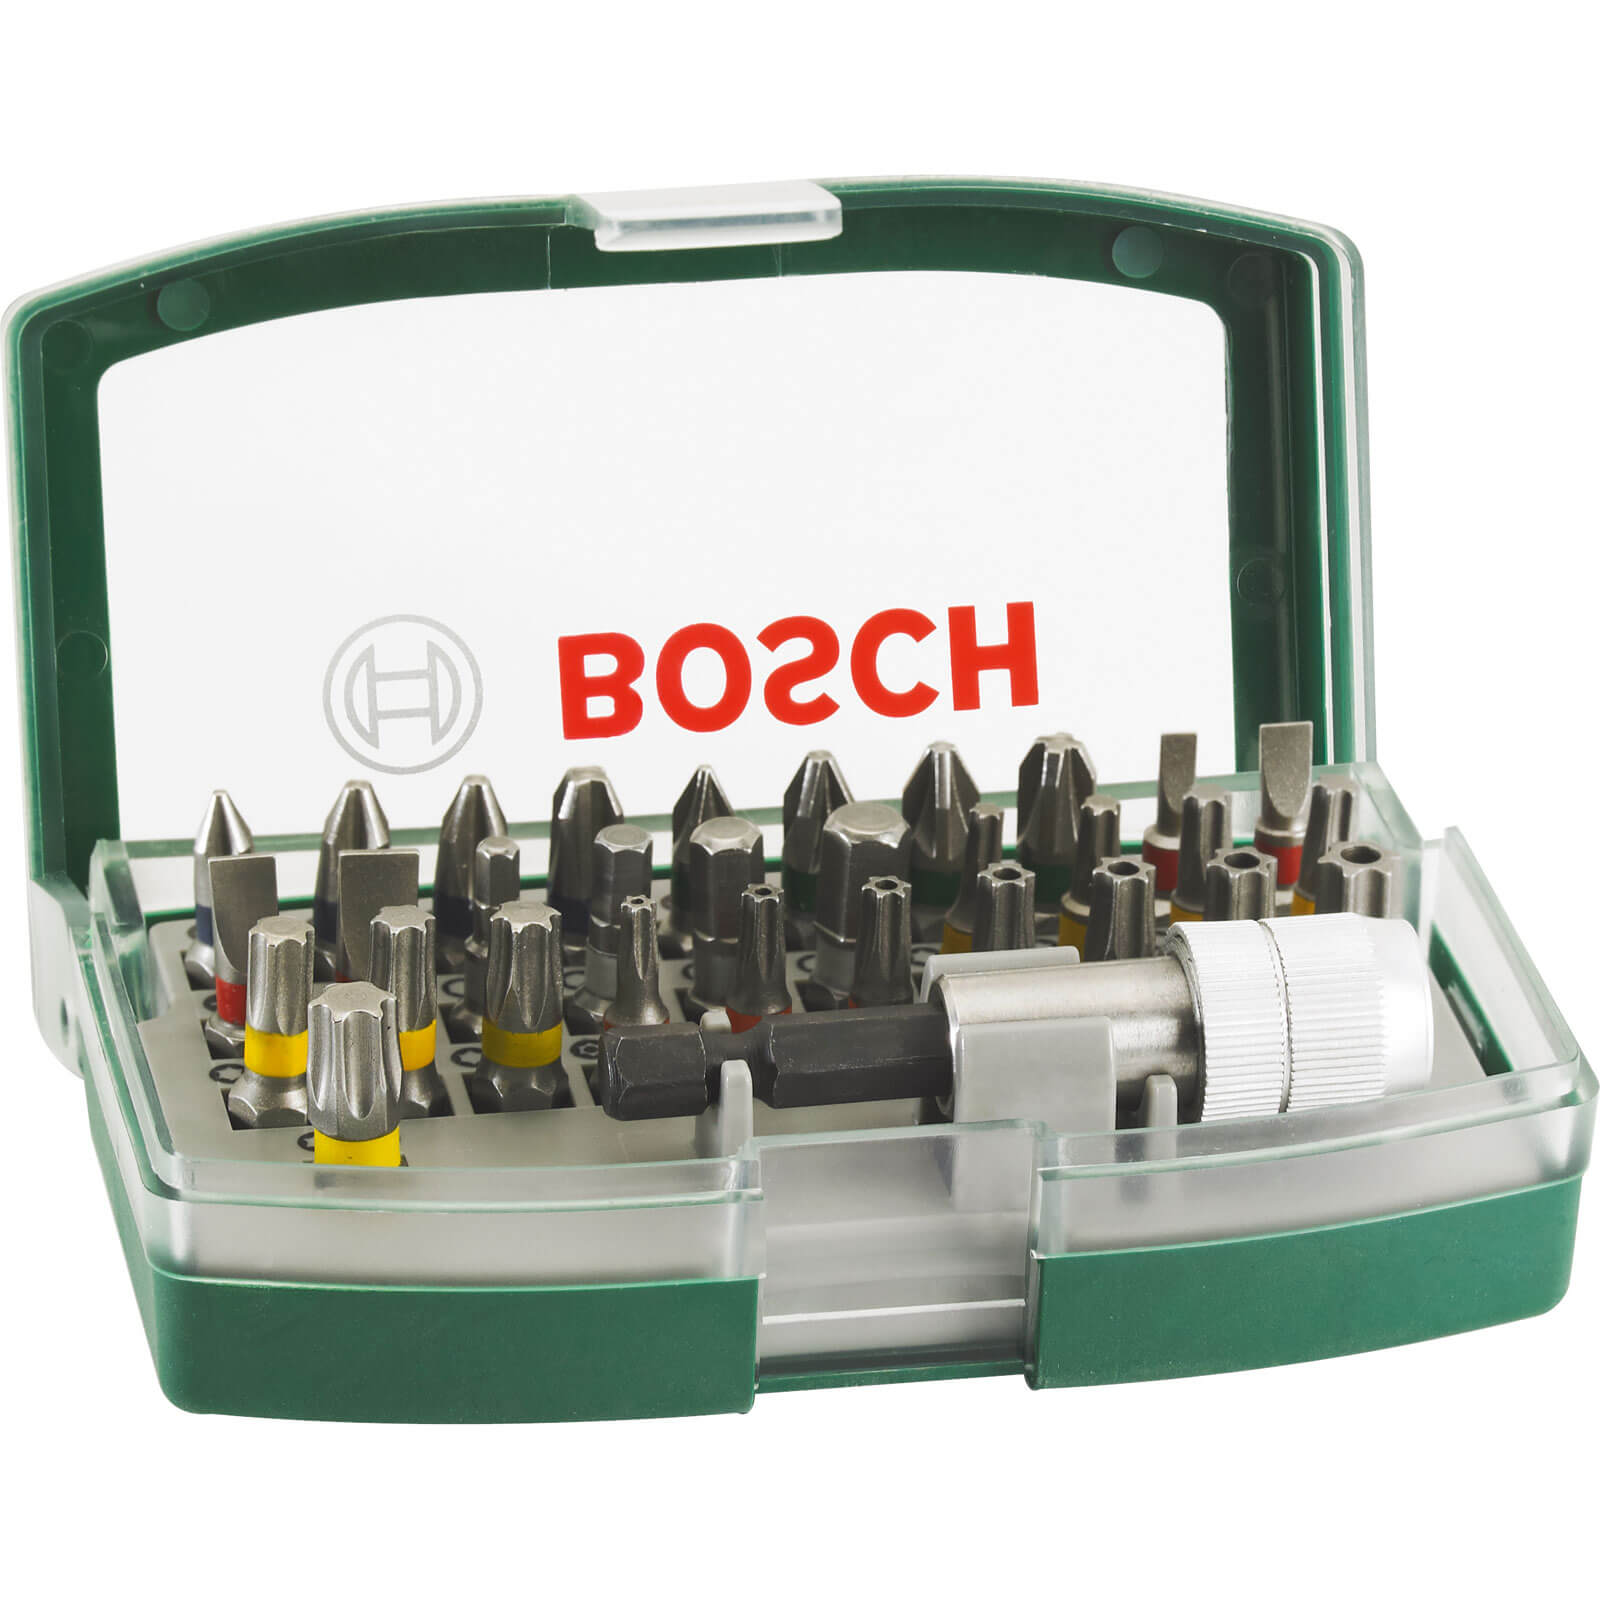 Photo of Bosch 32 Piece Colour Coded Screwdriver Bit Set